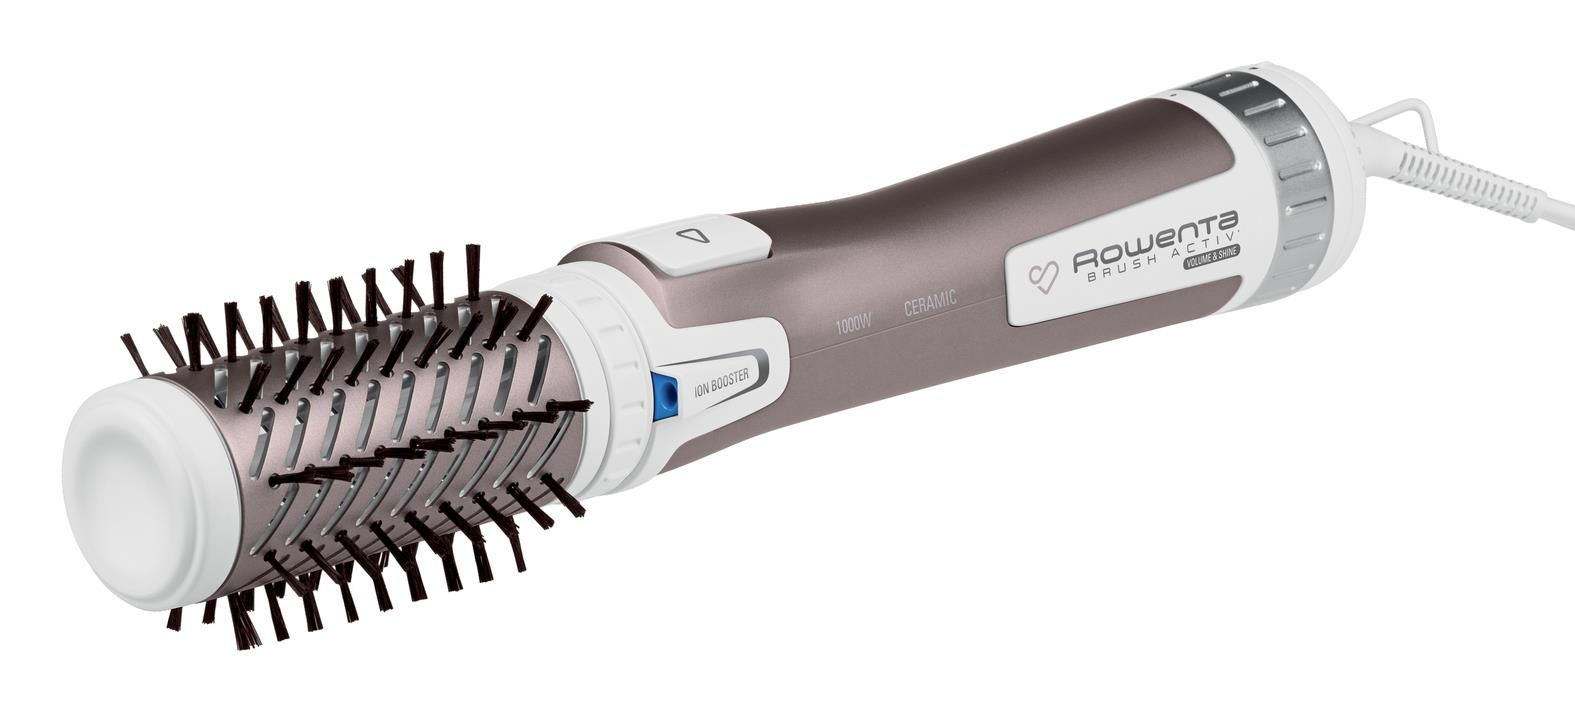 Rowenta Brush Activ - Come usare la spazzola 